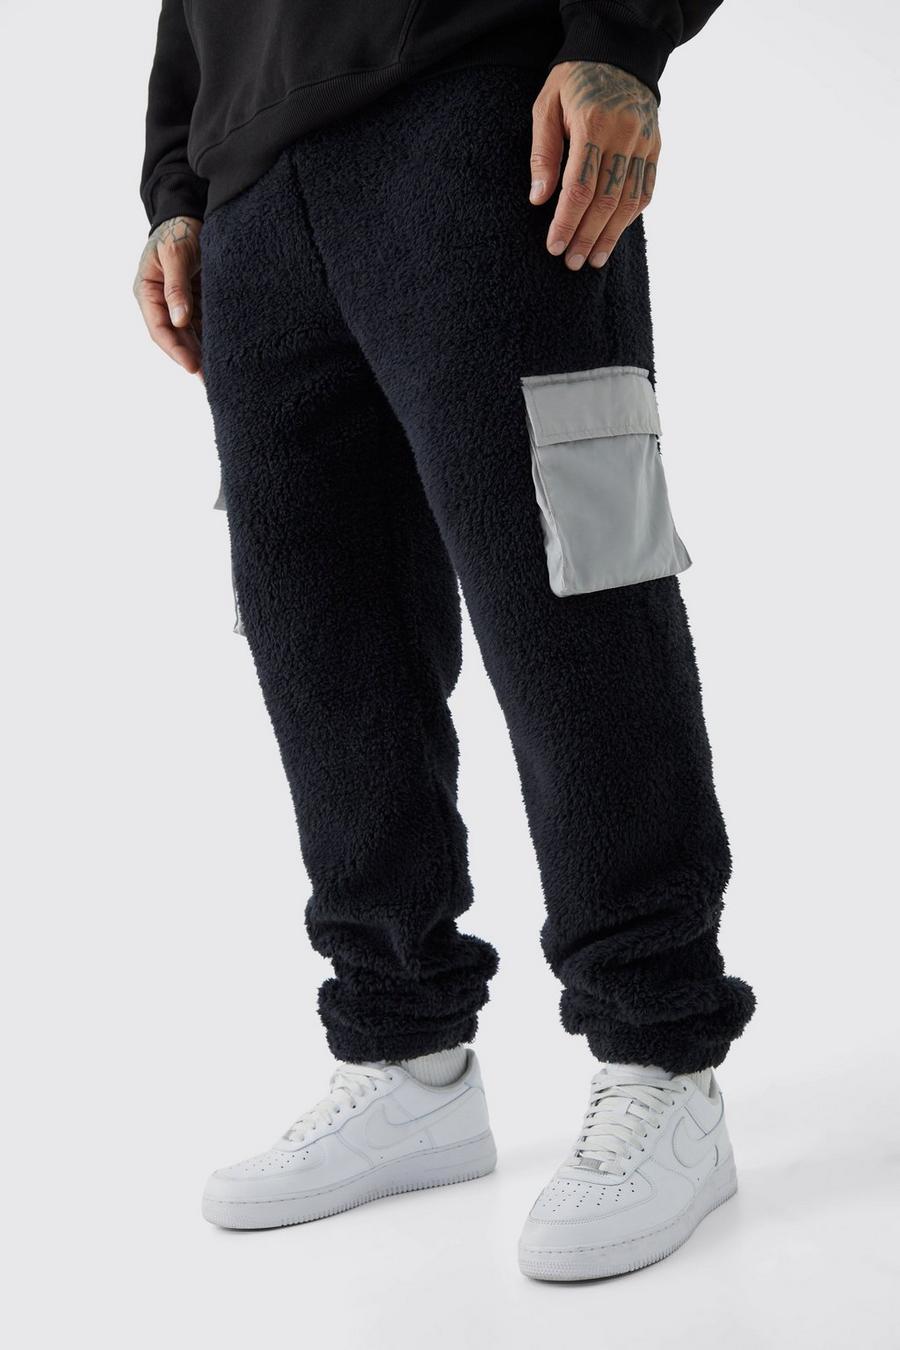 Pantaloni tuta Tall in pile borg con tasche Cargo in nylon, Black image number 1